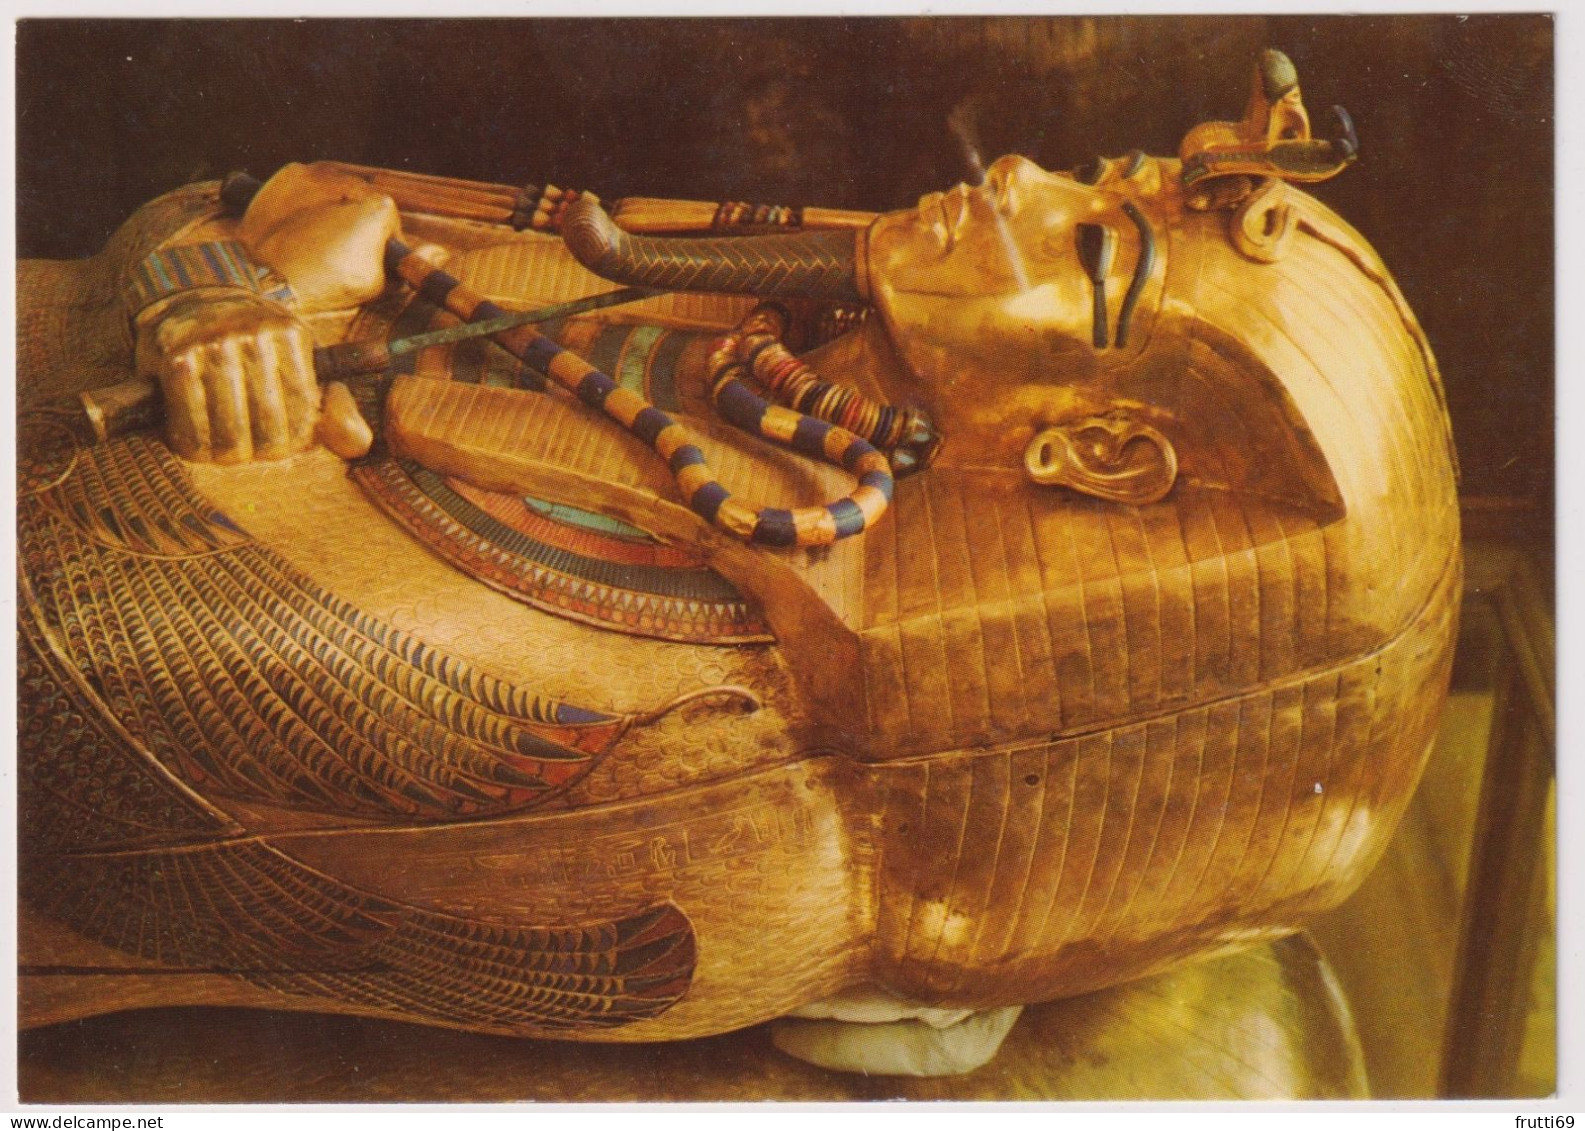 AK 198144 EGYPT - Cairo - Cairo Egyptian Museum - Tut Ankh Amun's Treasures - Second Coffin - Musea